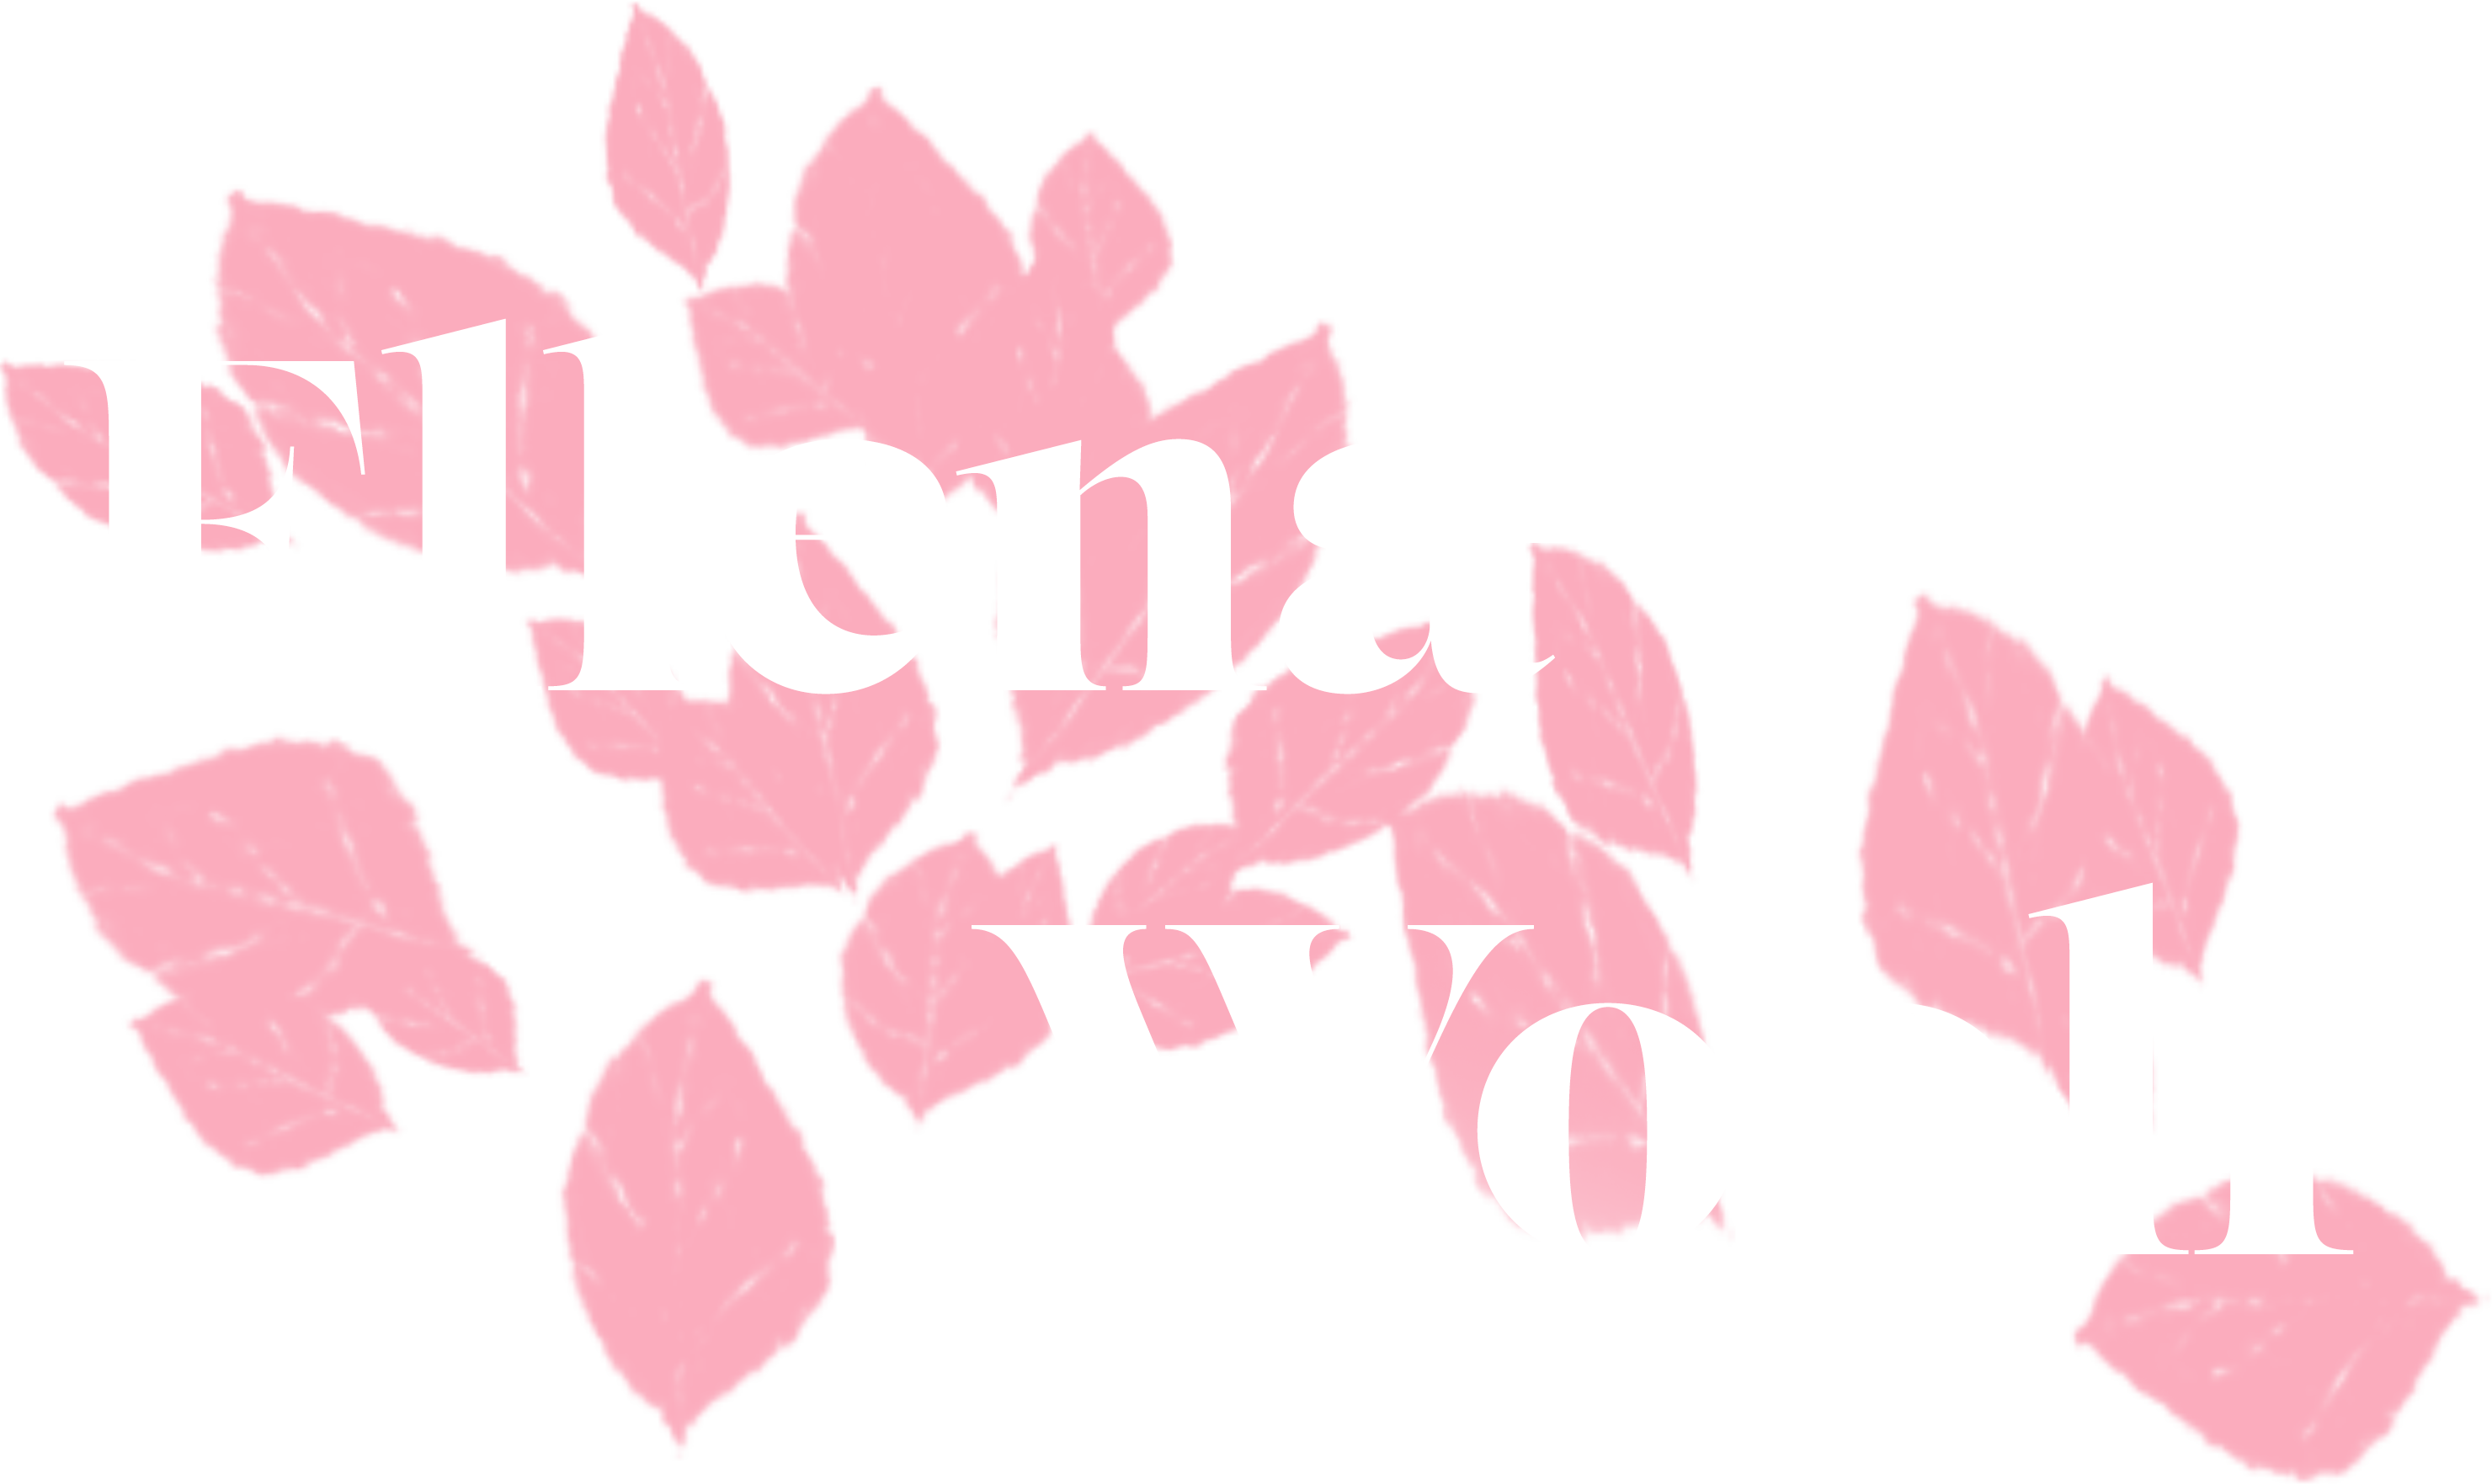 Ellena Woolf